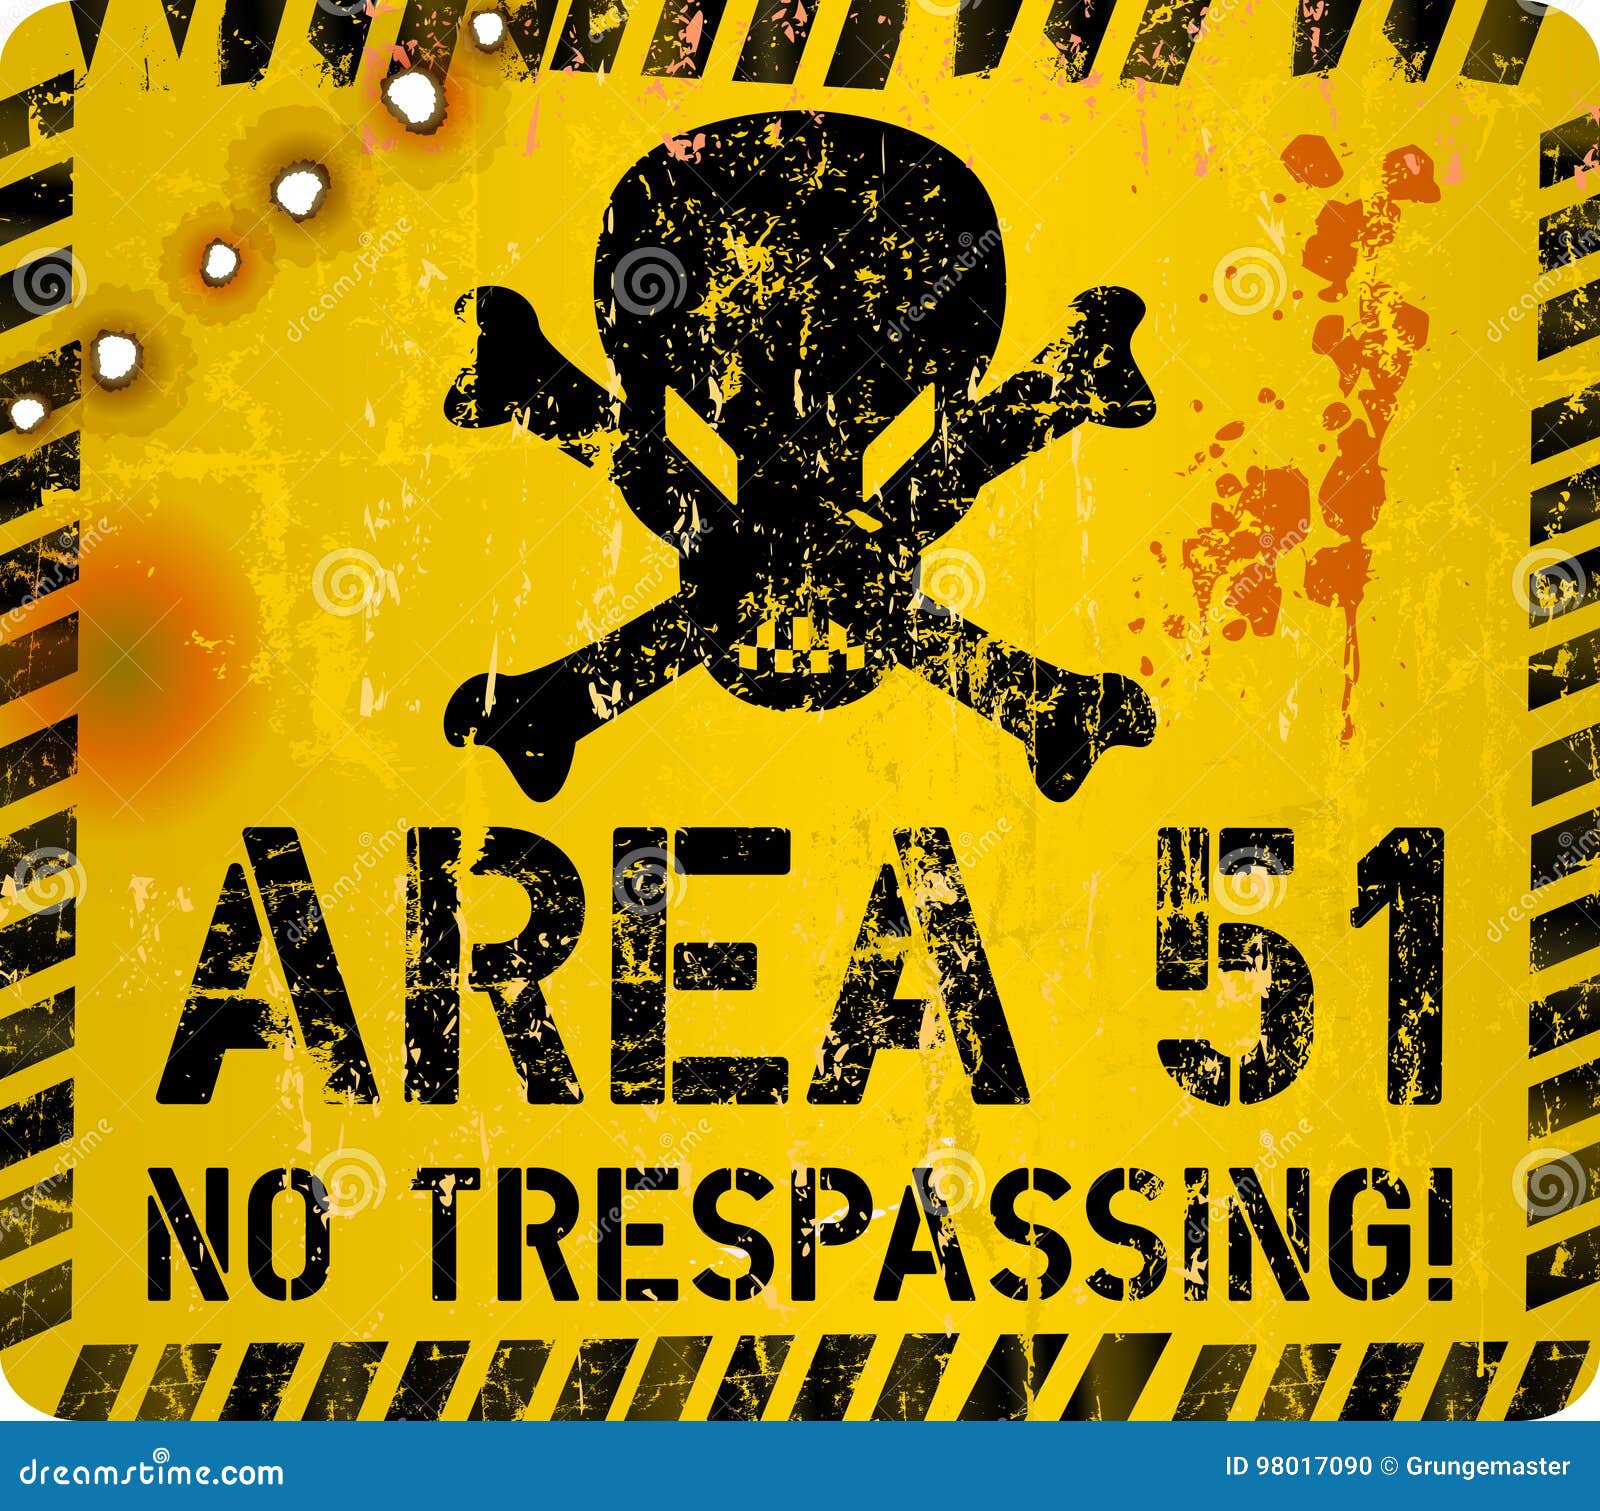 area 51 sign.